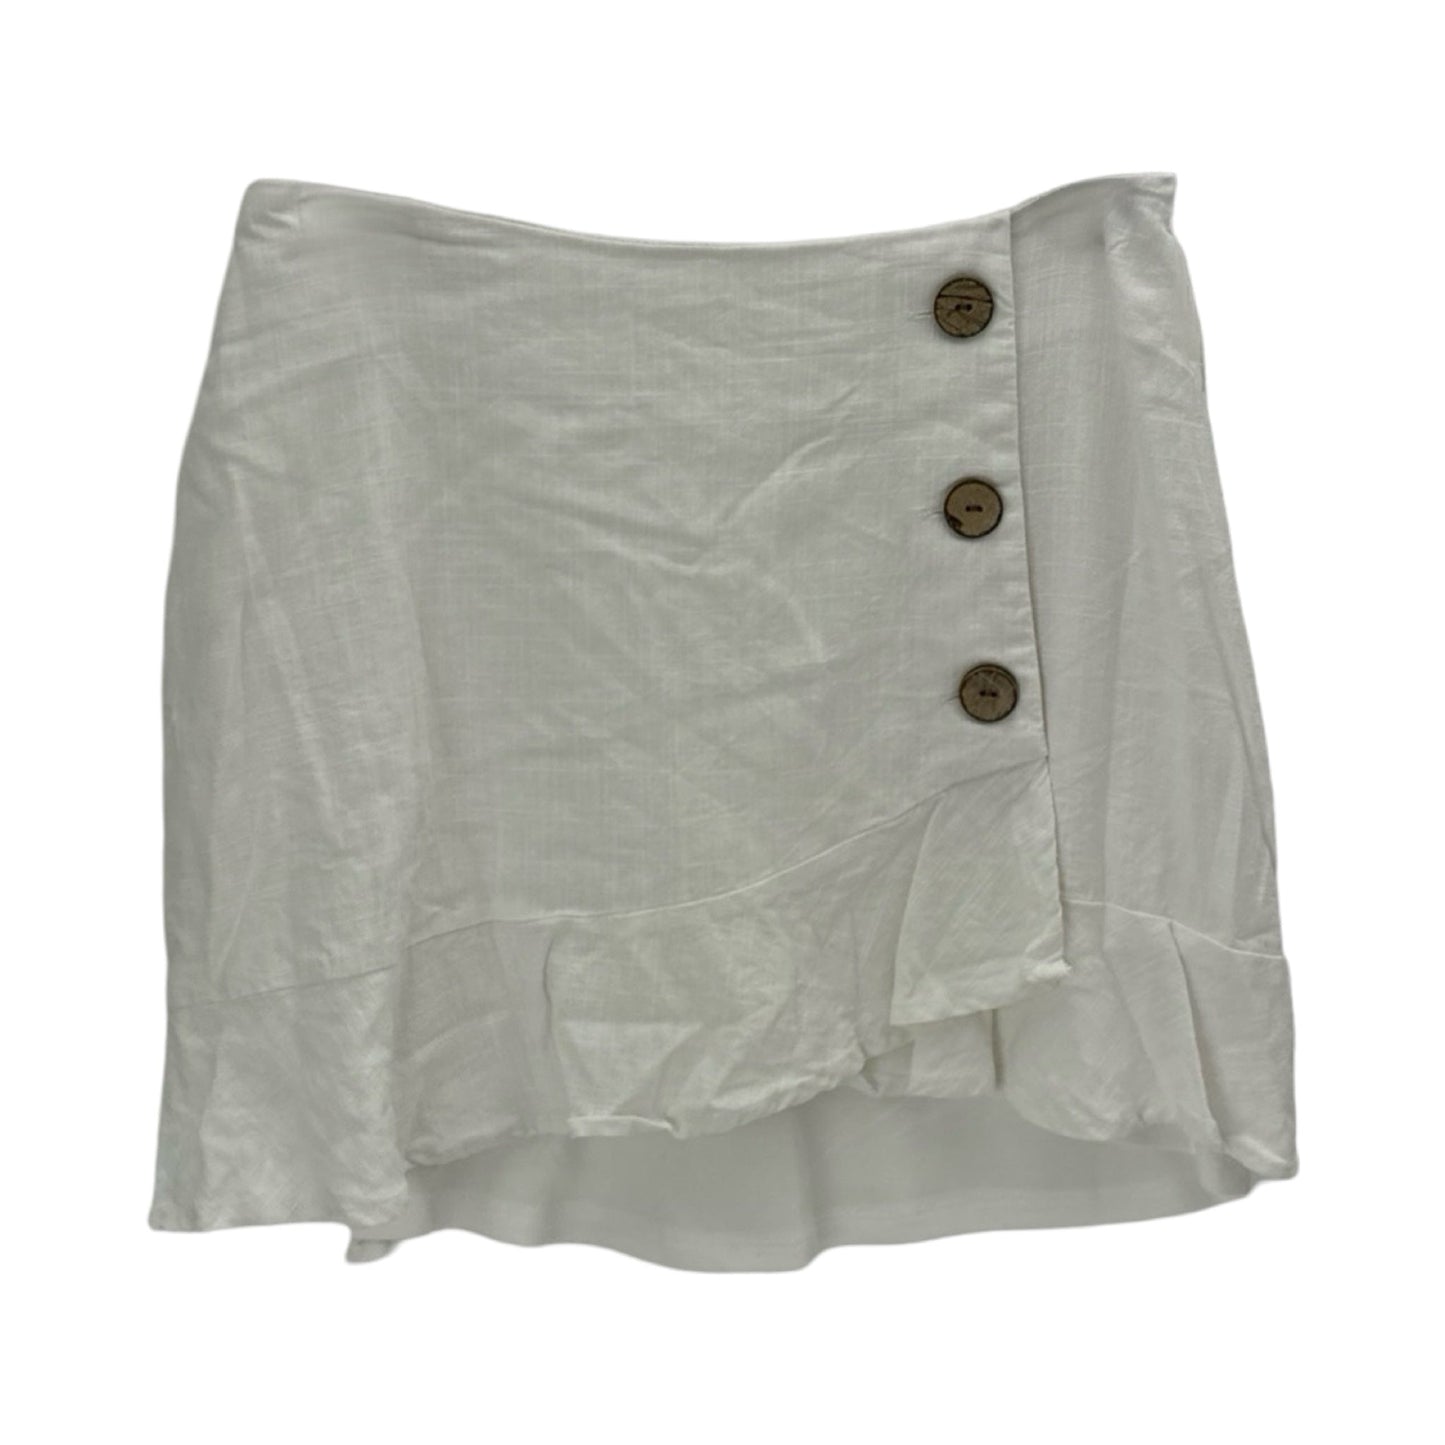 White Skirt Mini & Short Cotton Candy, Size M